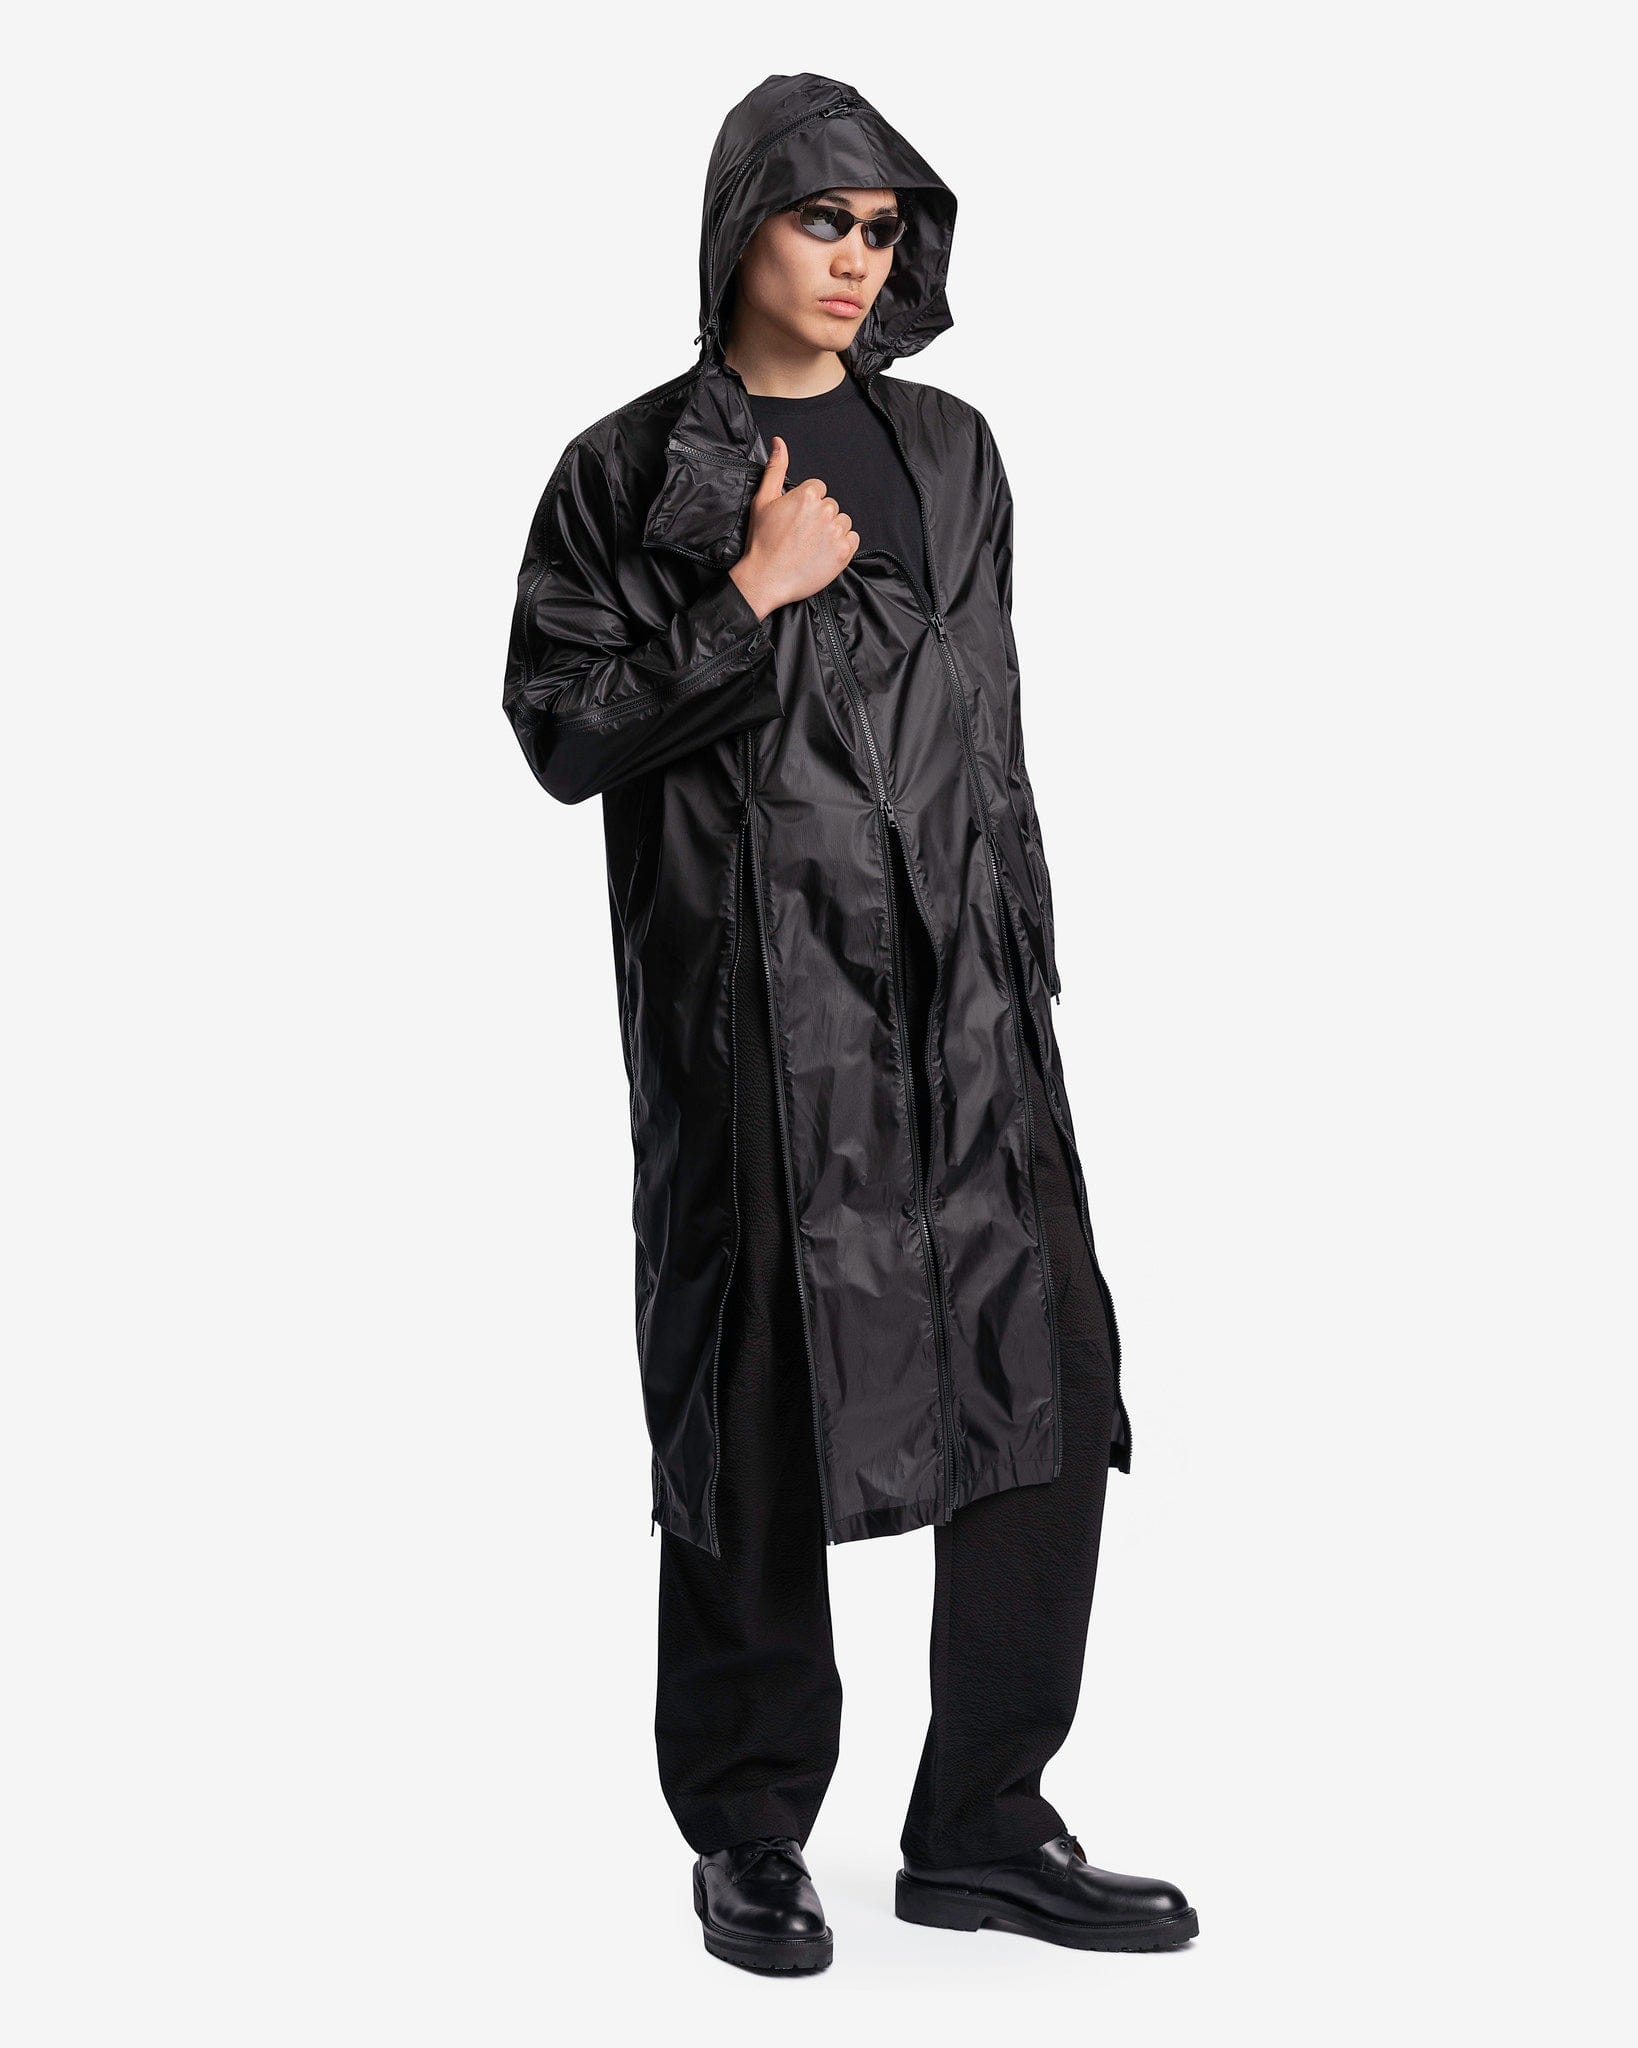 POST ARCHIVE FACTION (P.A.F) Men's Coat 5.0+ Coat Center in Black